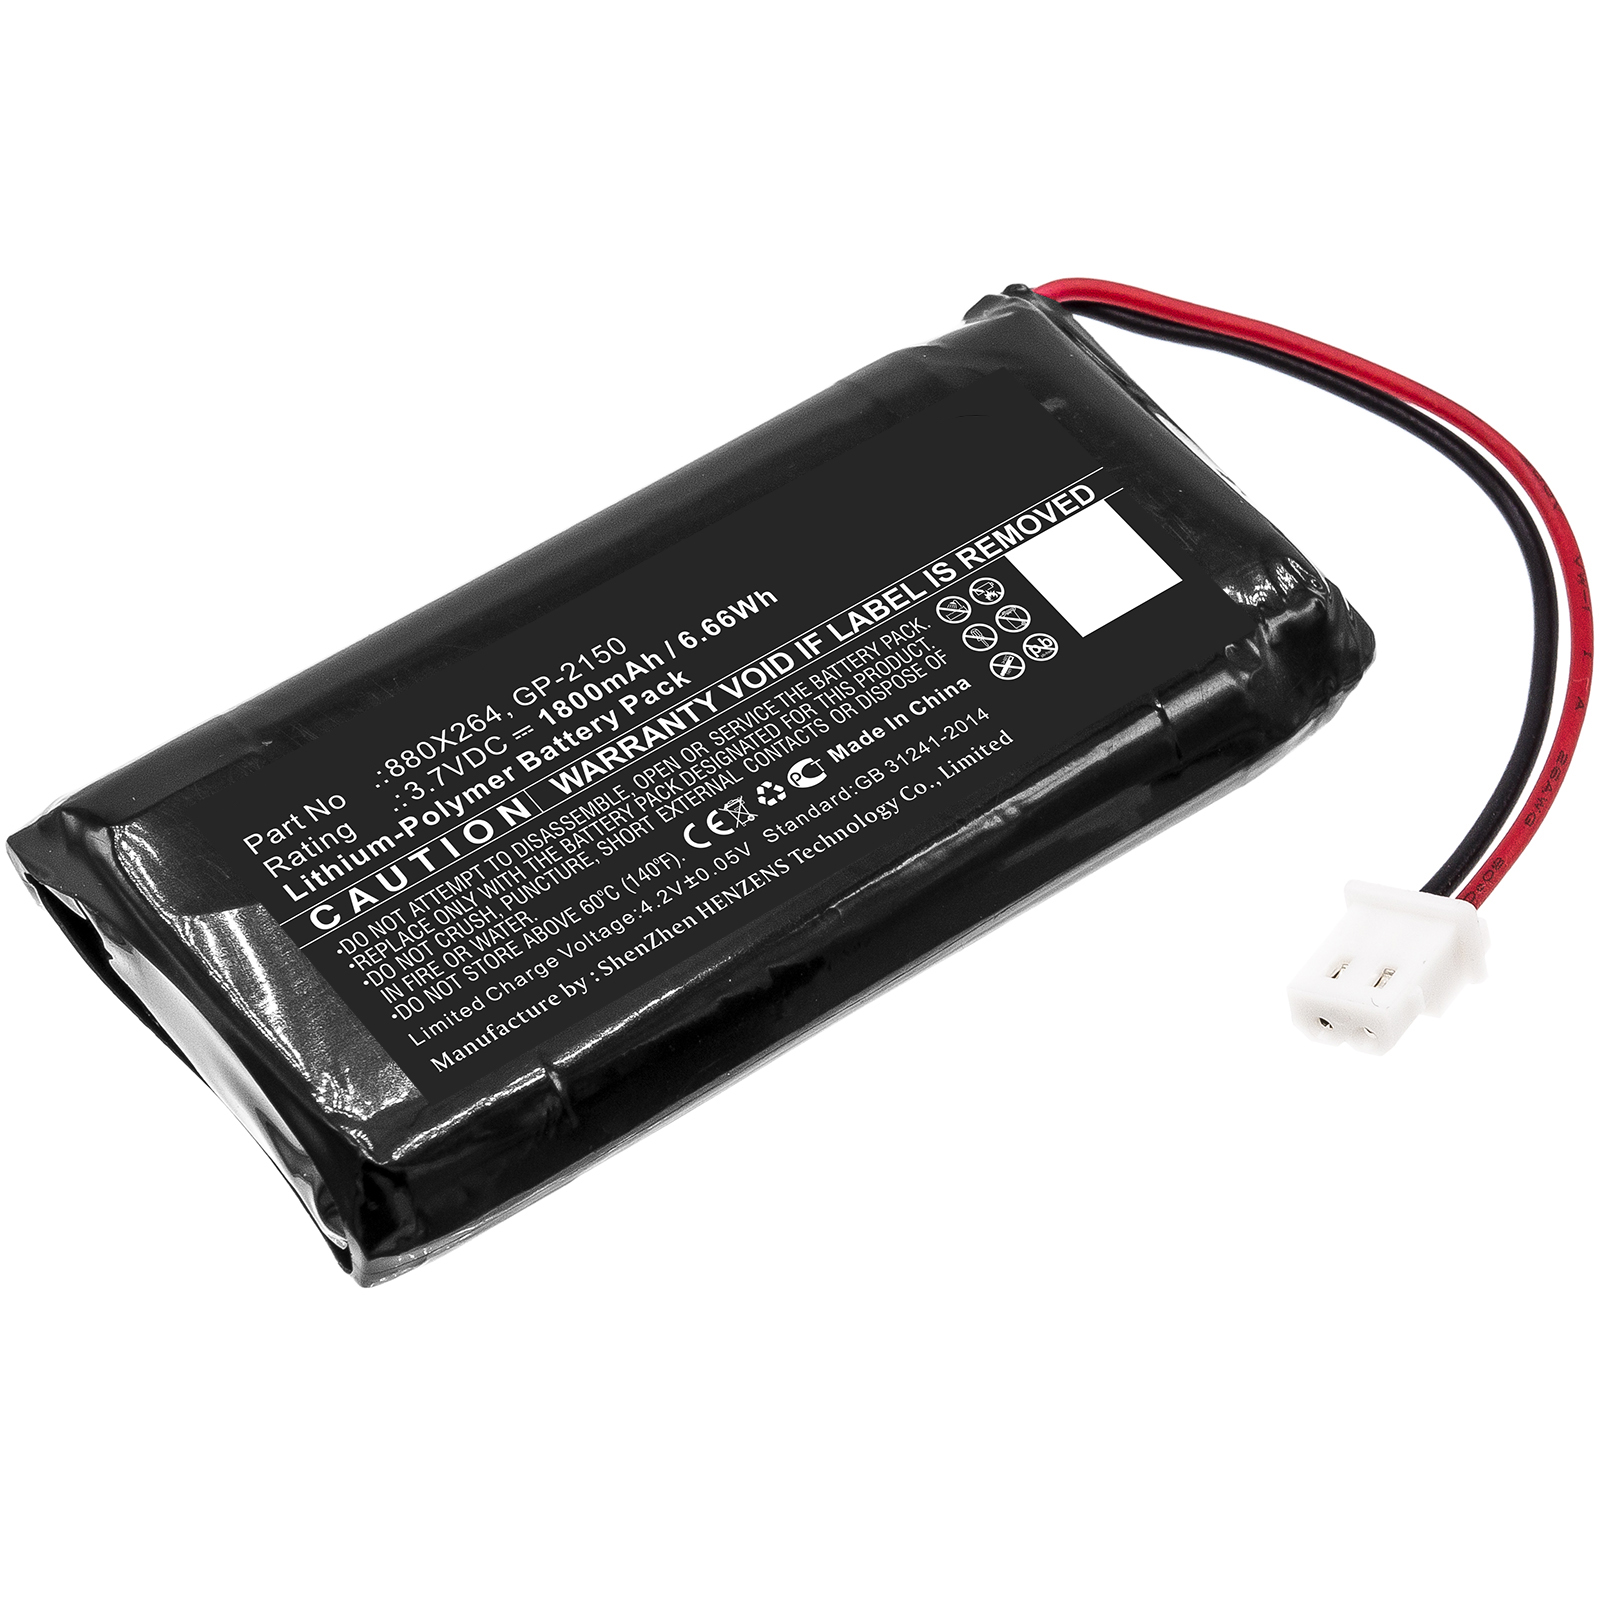 Synergy Digital Equipment Battery, Compatible with EXFO 880X264, GP103045L180R, GP-2150 Equipment Battery (3.7V, Li-Pol, 1800mAh)